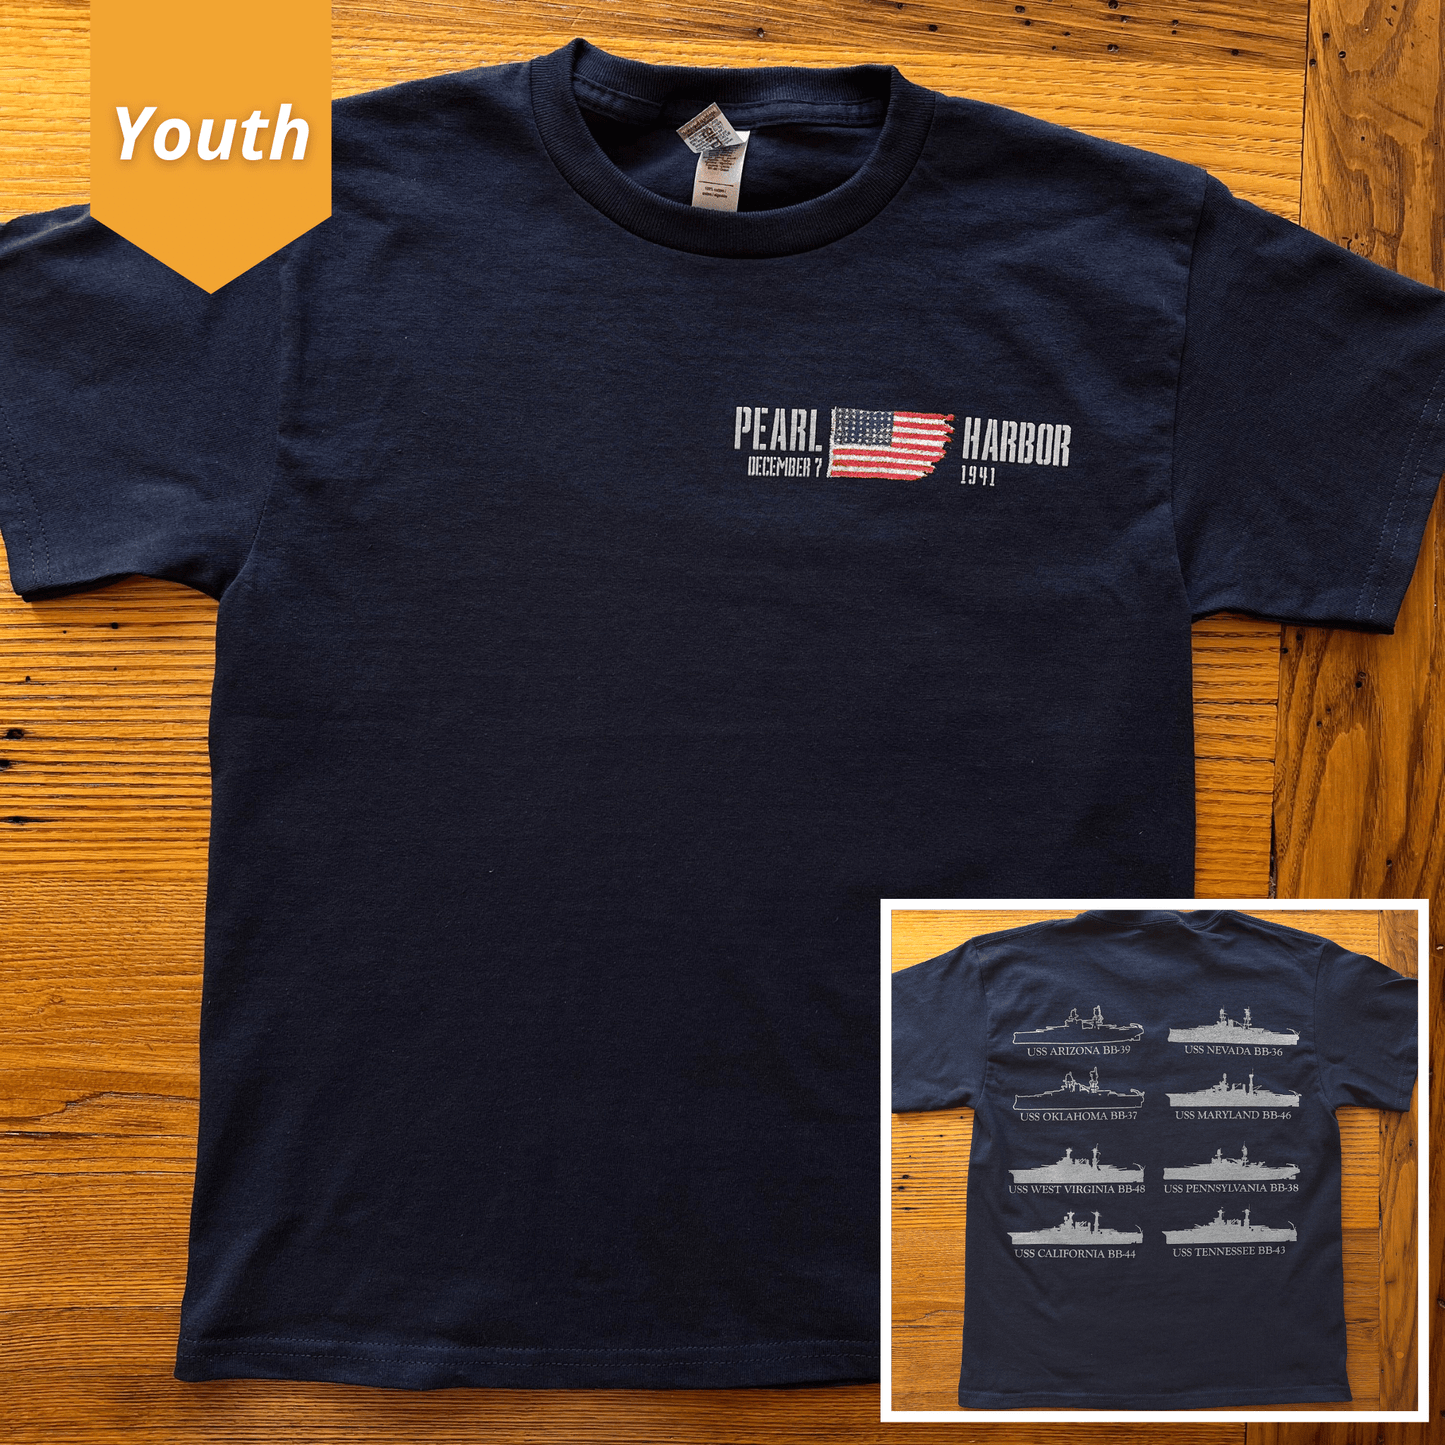 Pearl Harbor “Battleship Row” Shirt in Youth sizes